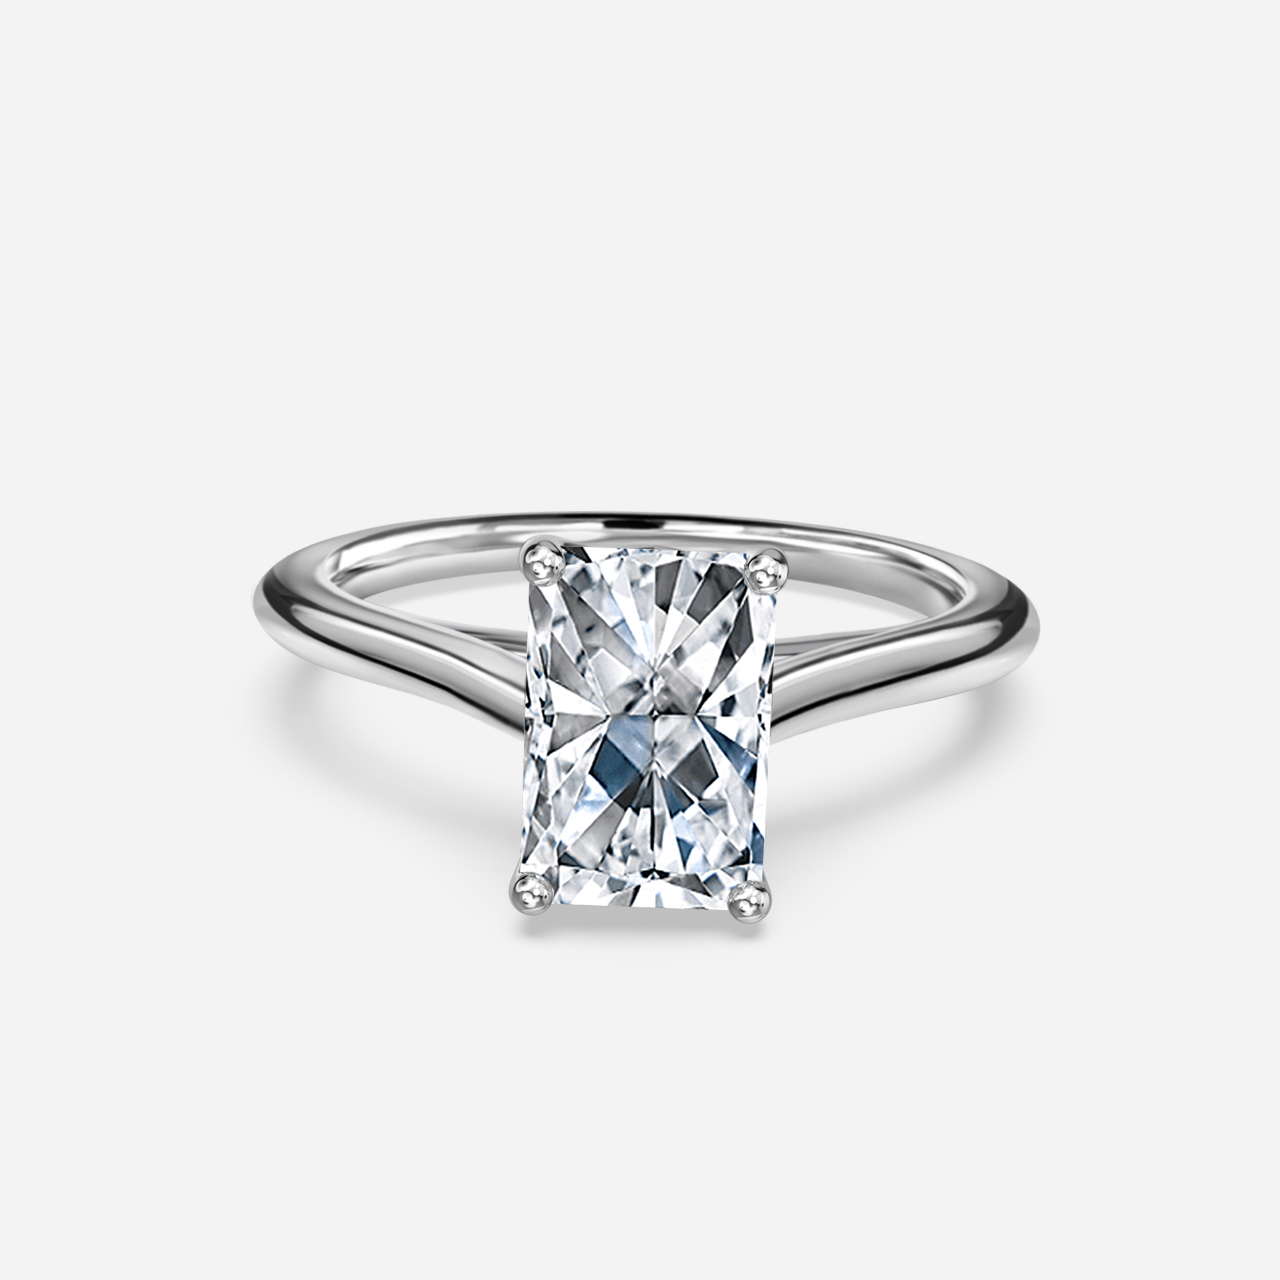 Aerin White Gold Unique Engagement Ring